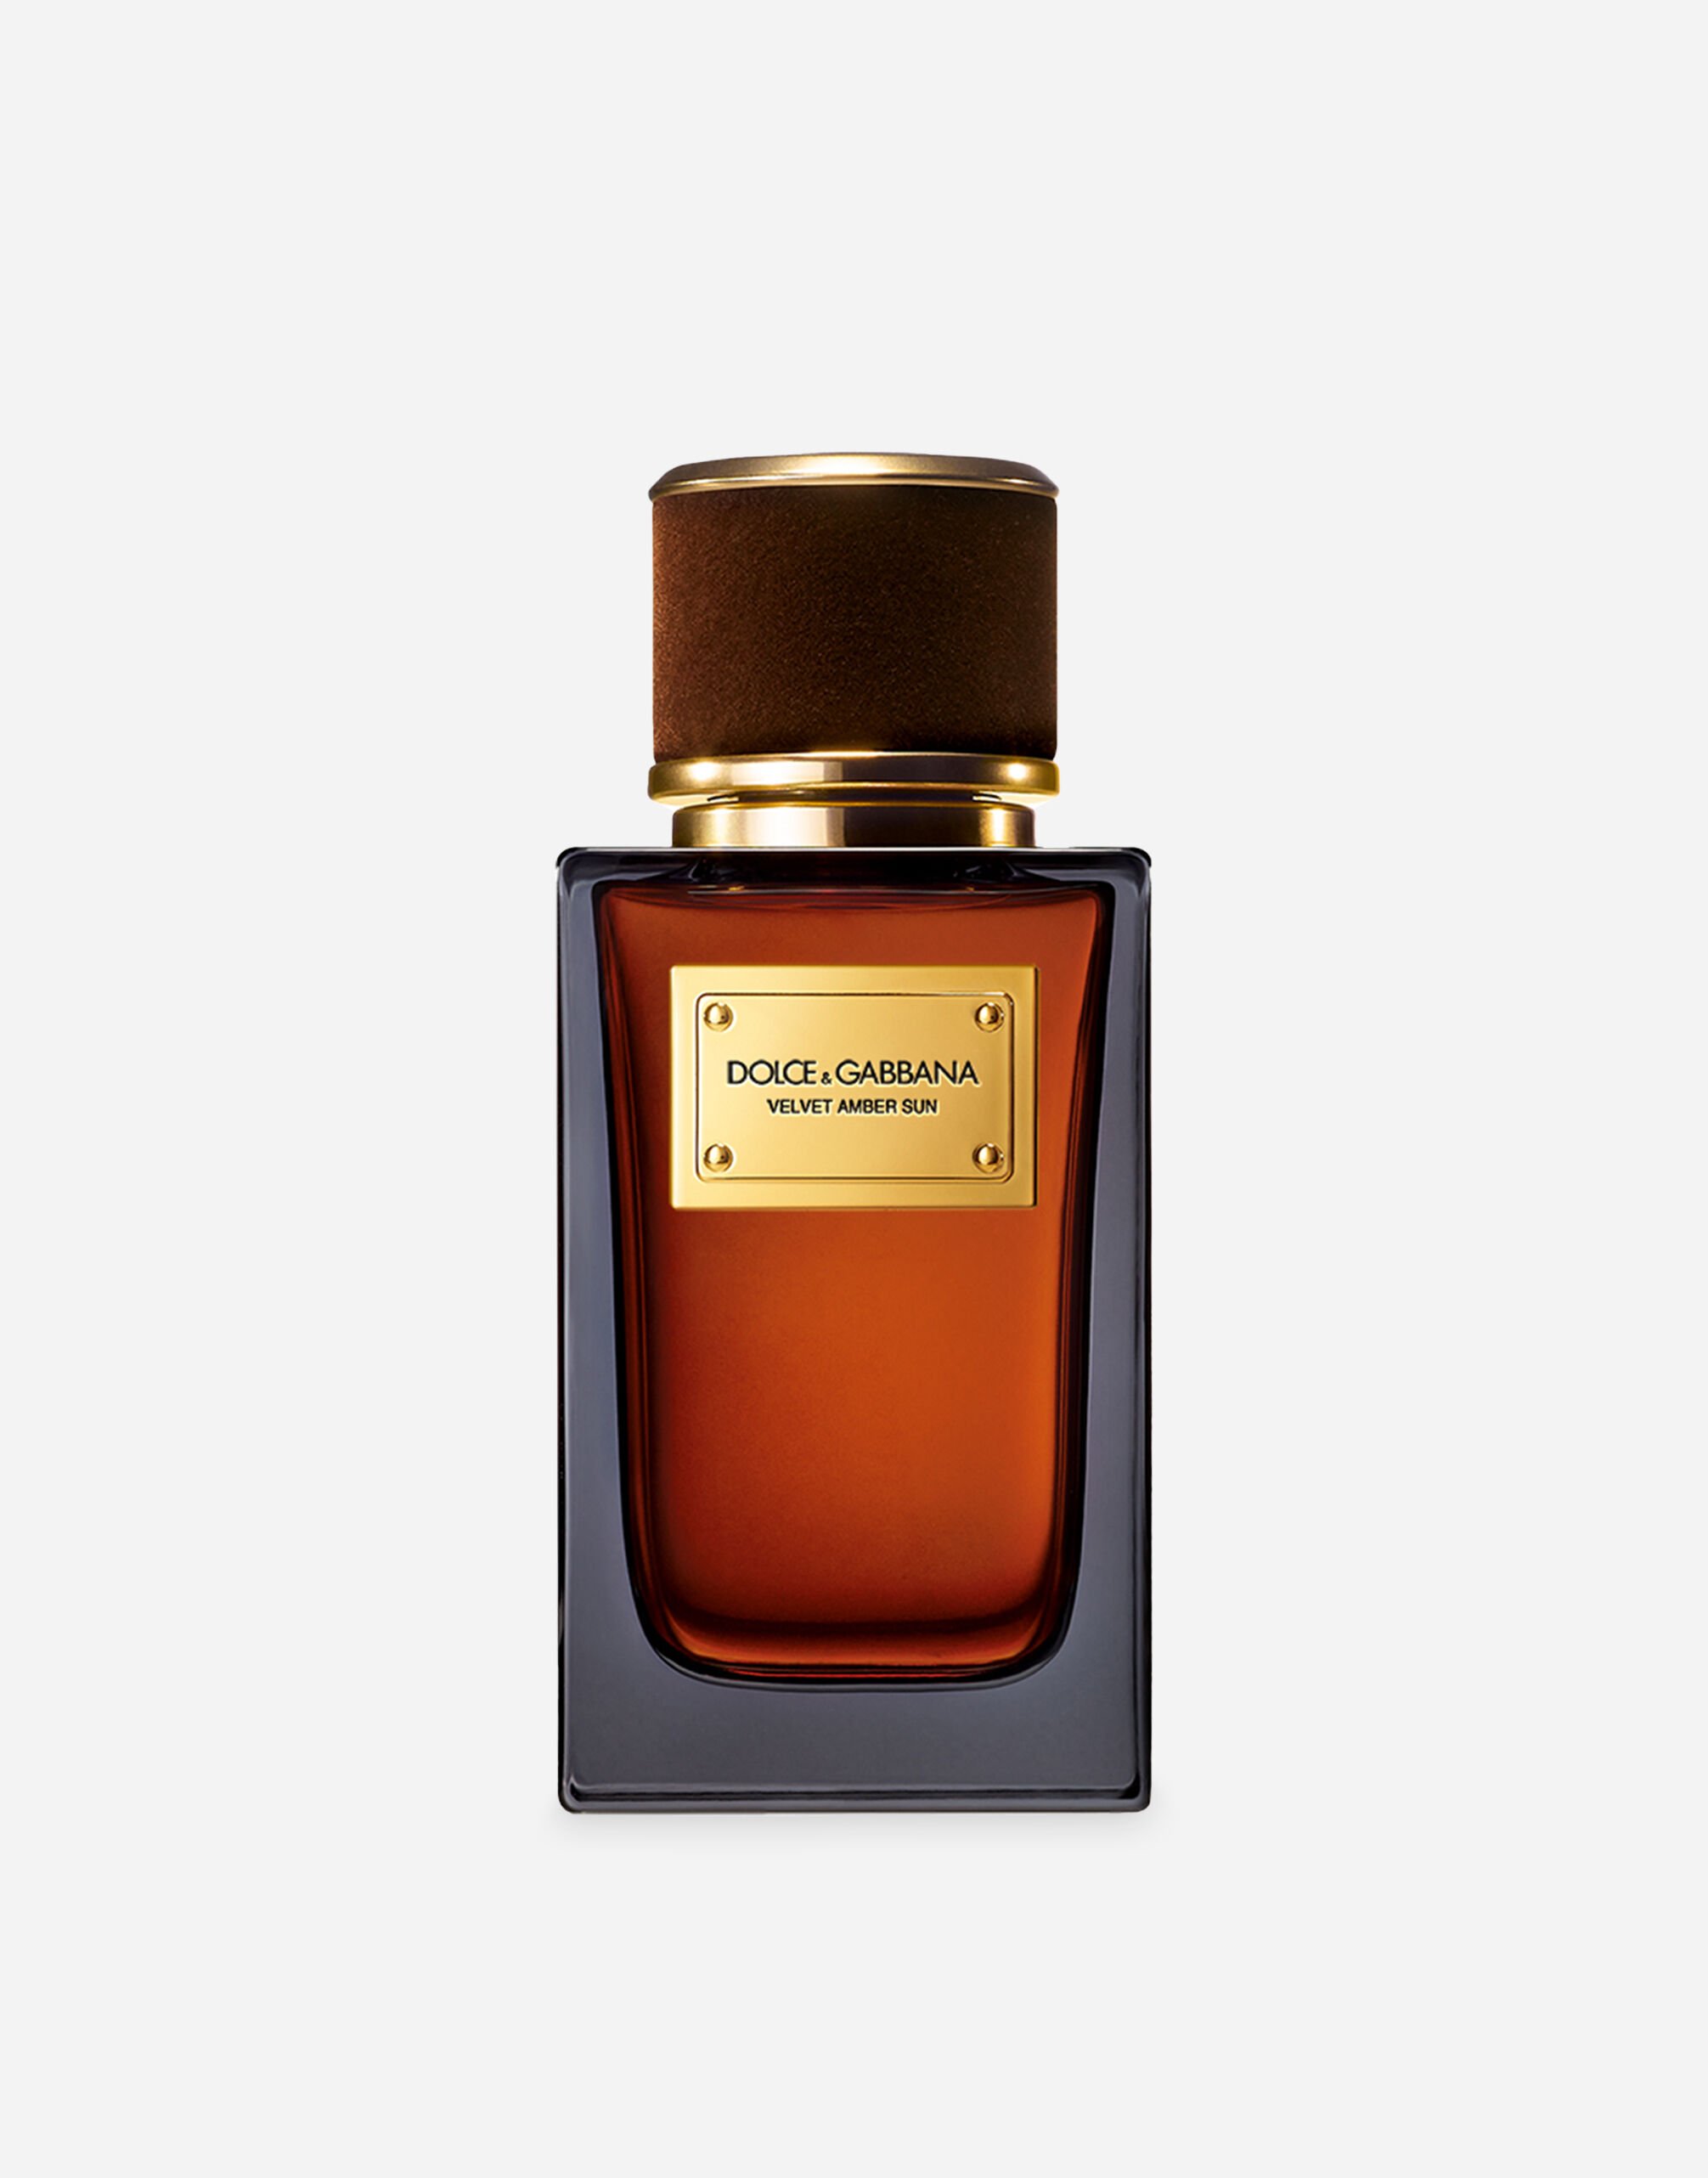 Dolce & Gabbana Velvet Amber Sun Eau de Parfum - VP6974VP243